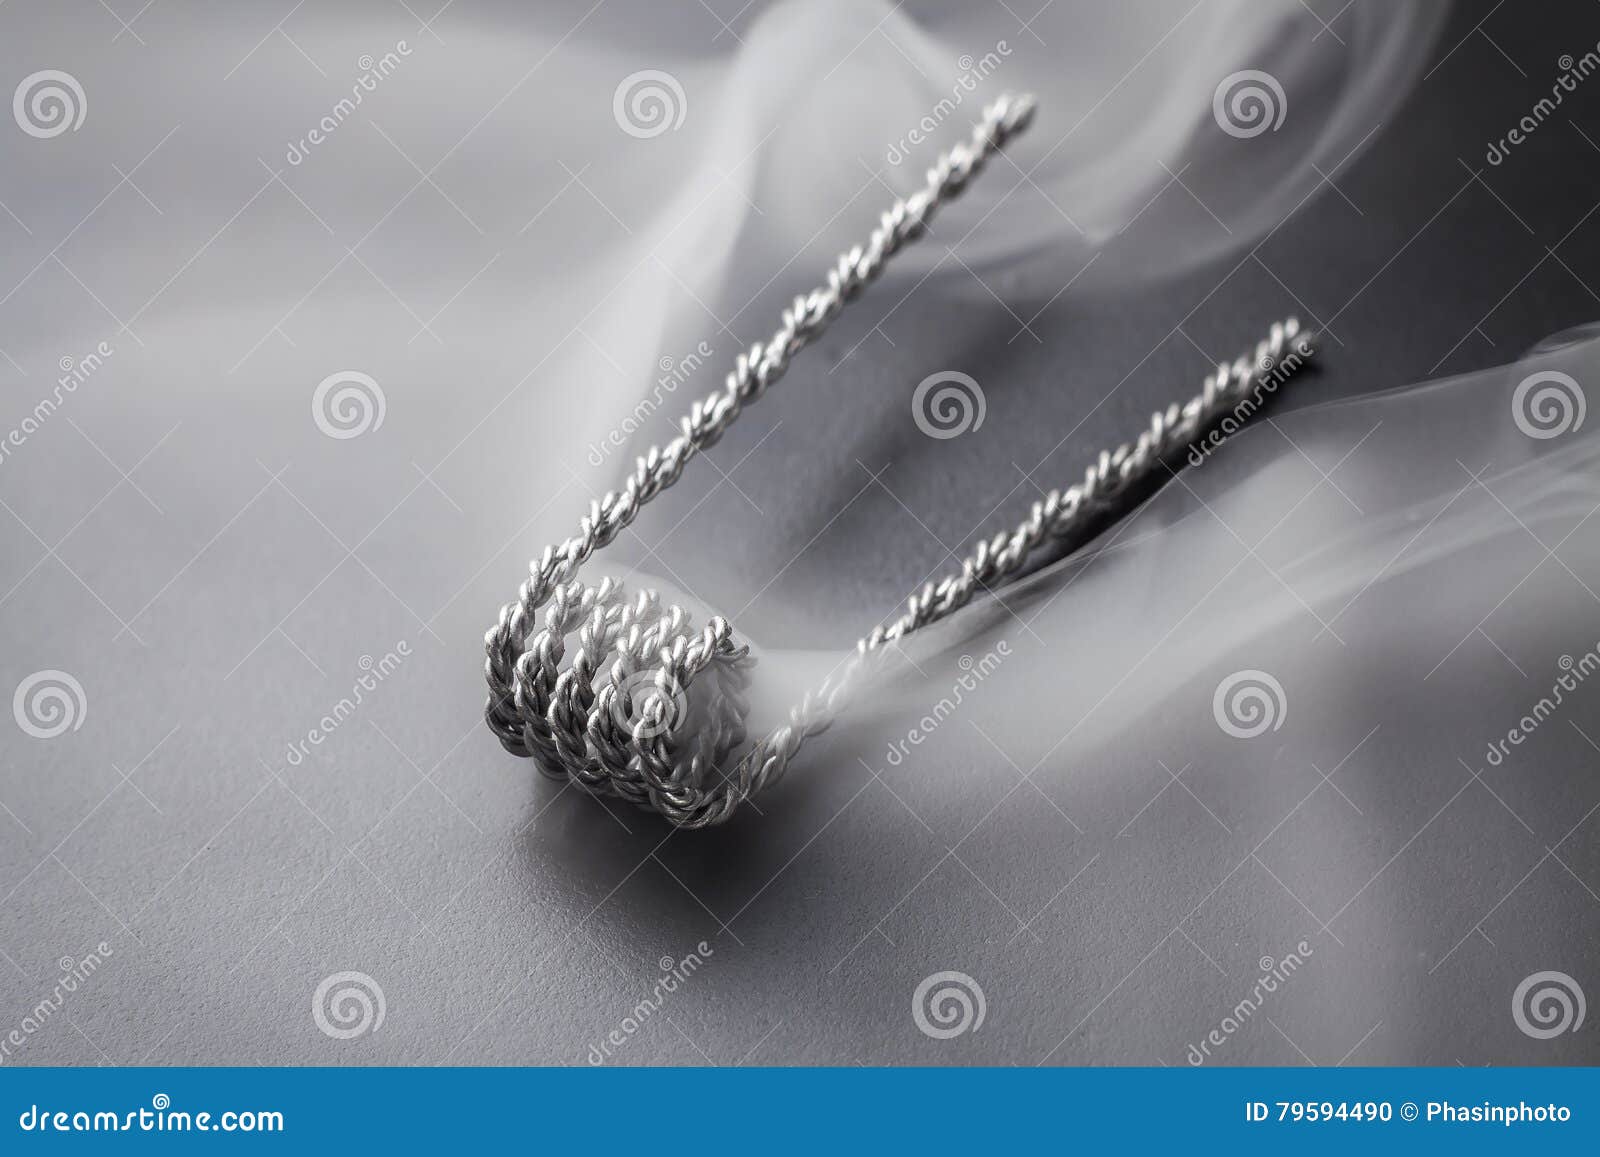 Hive Coil for Vaping on a Black Background Somke Stock Photo - Image of  titanium, clapton: 79594490